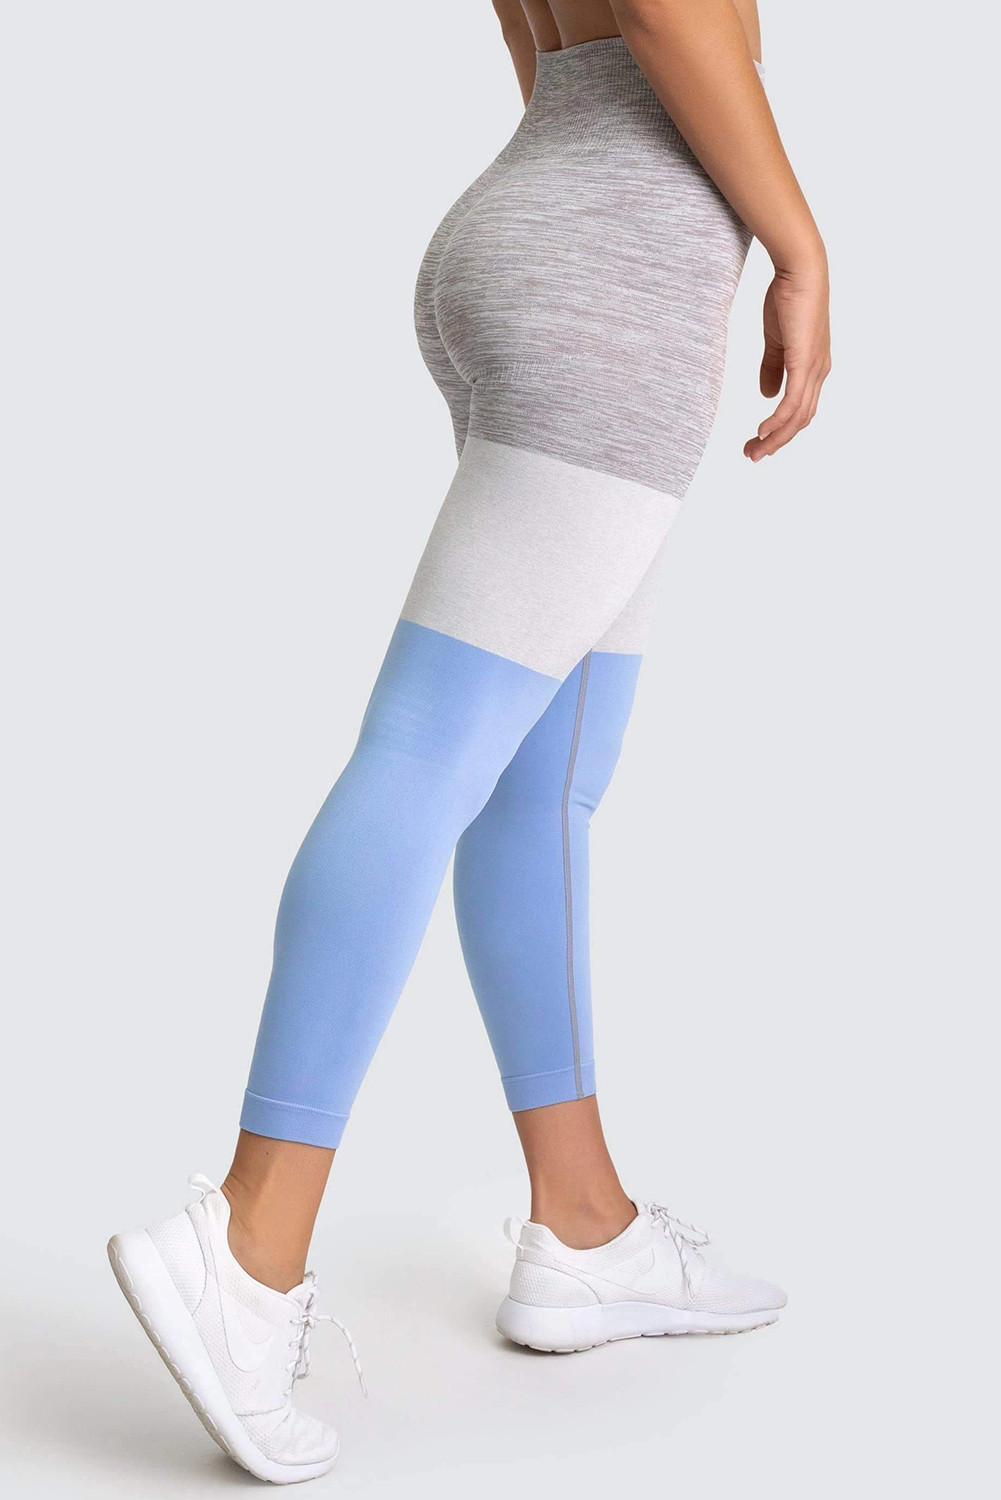 Royal Blue Heathered Splice Plus Size Yoga Pants  Plus size yoga, Blue  yoga pants, High waist yoga pants